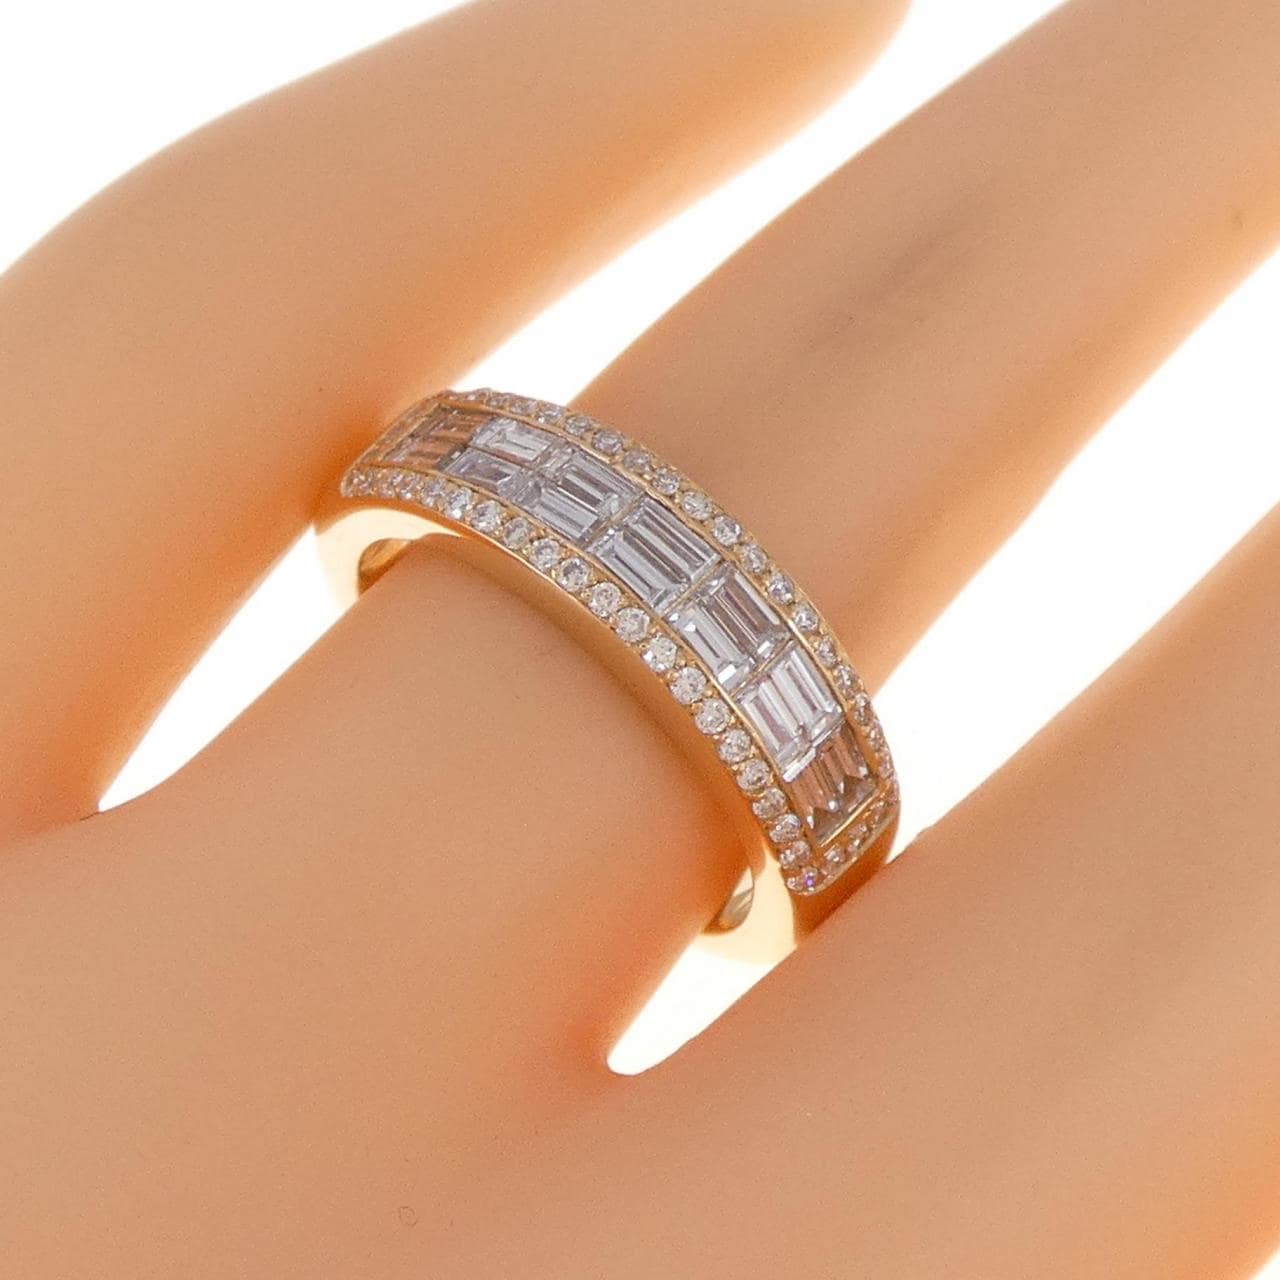 750PG Diamond ring